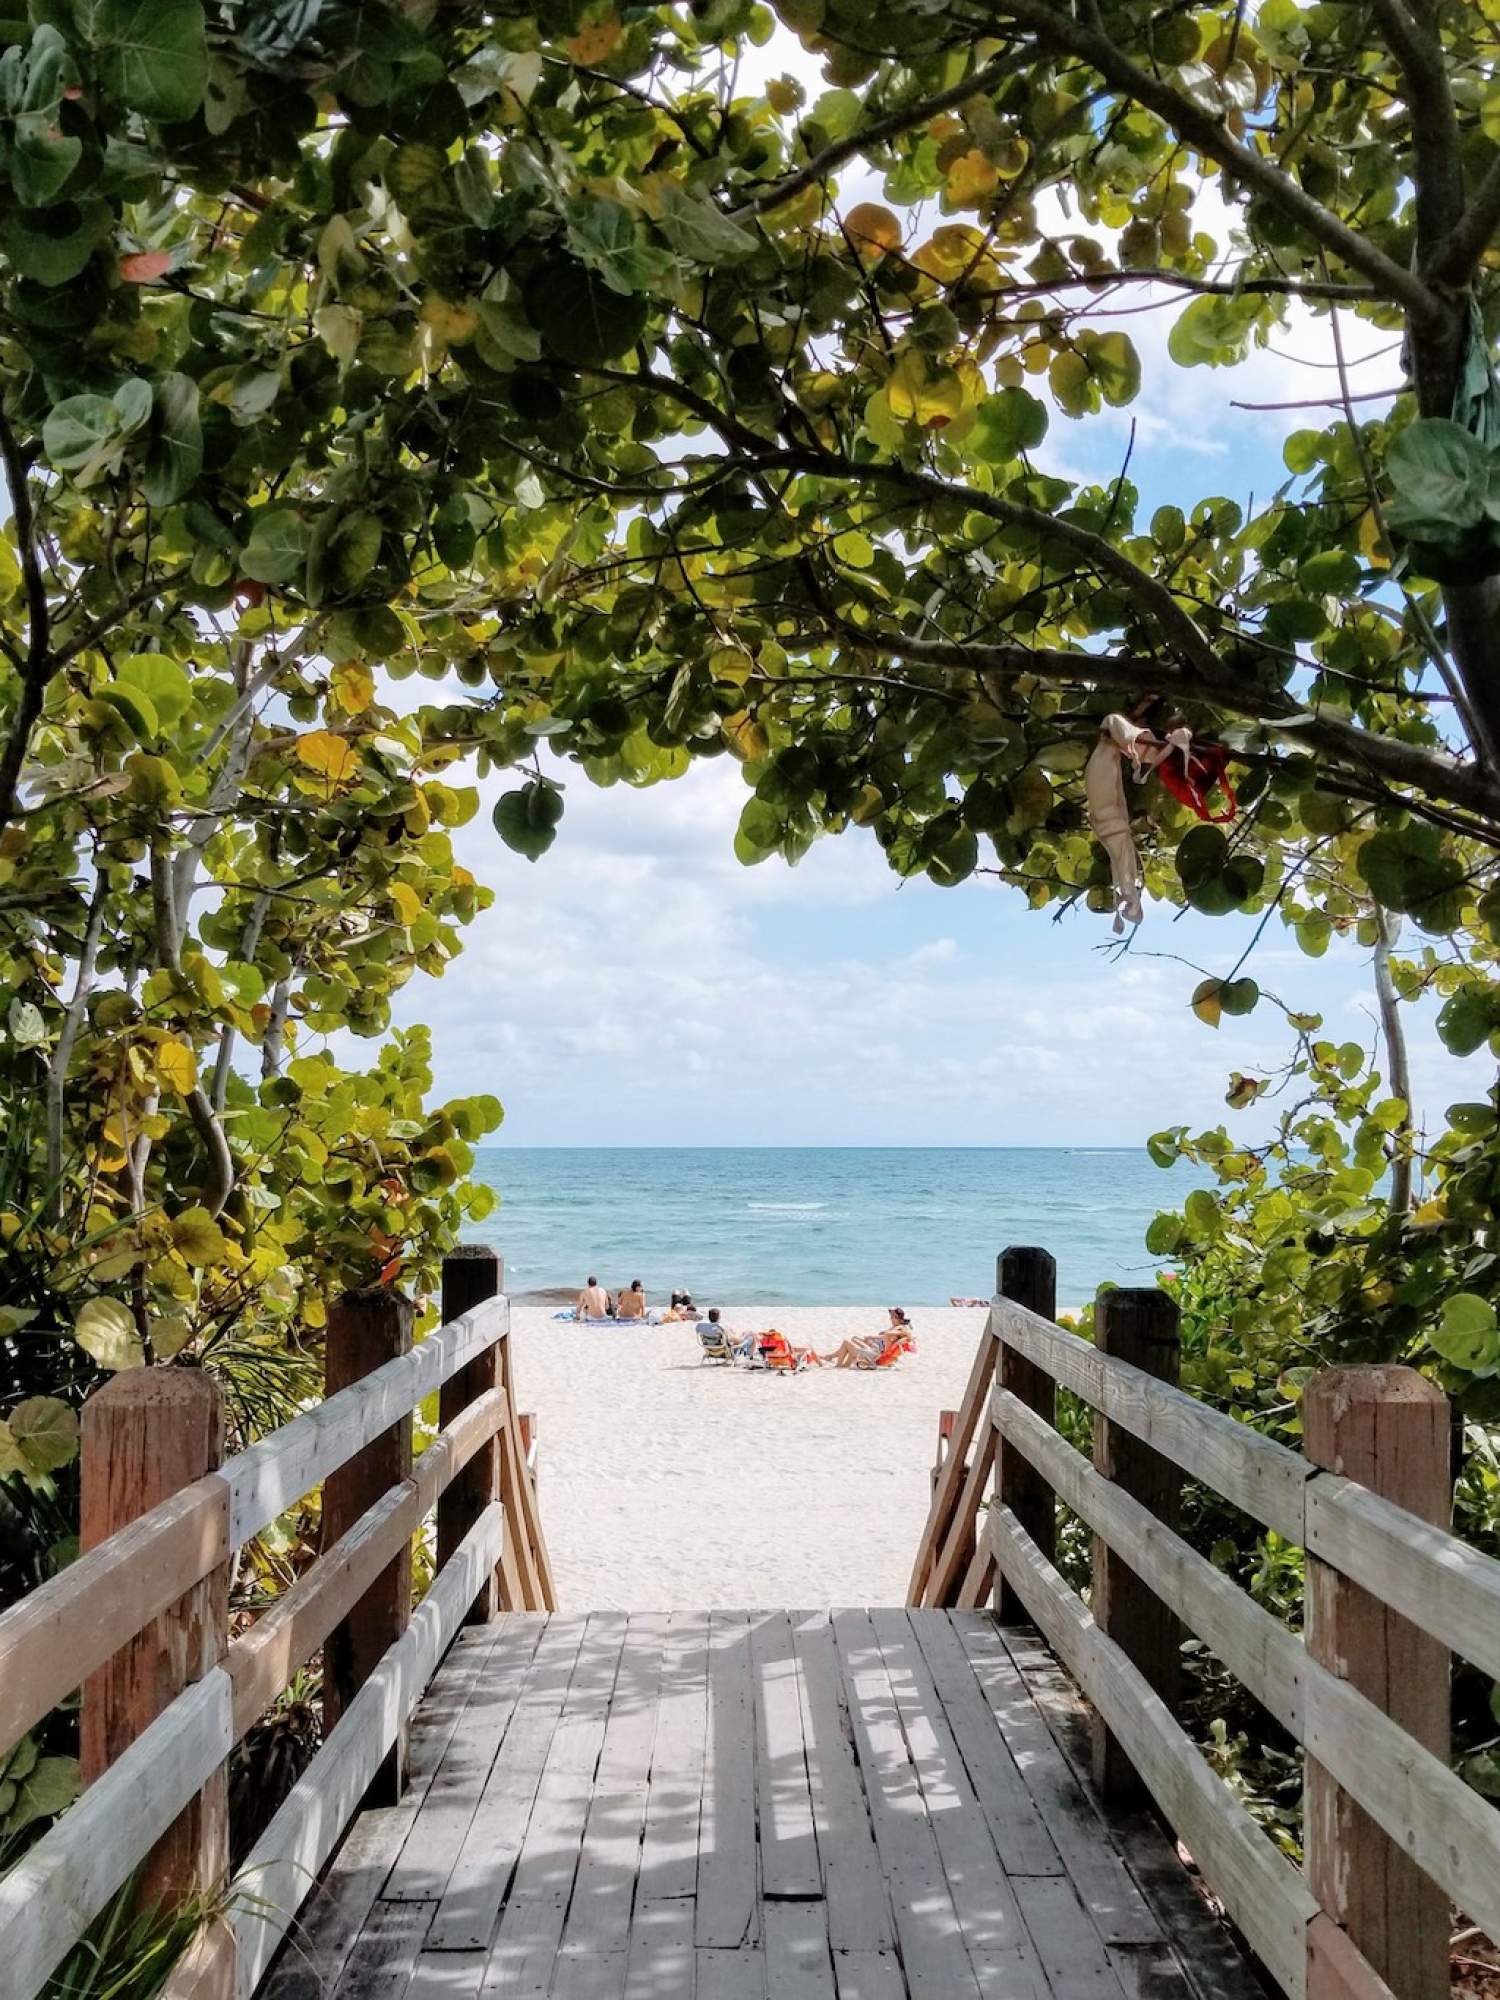 Miami Beach, a top destination for a long weekend in Miami